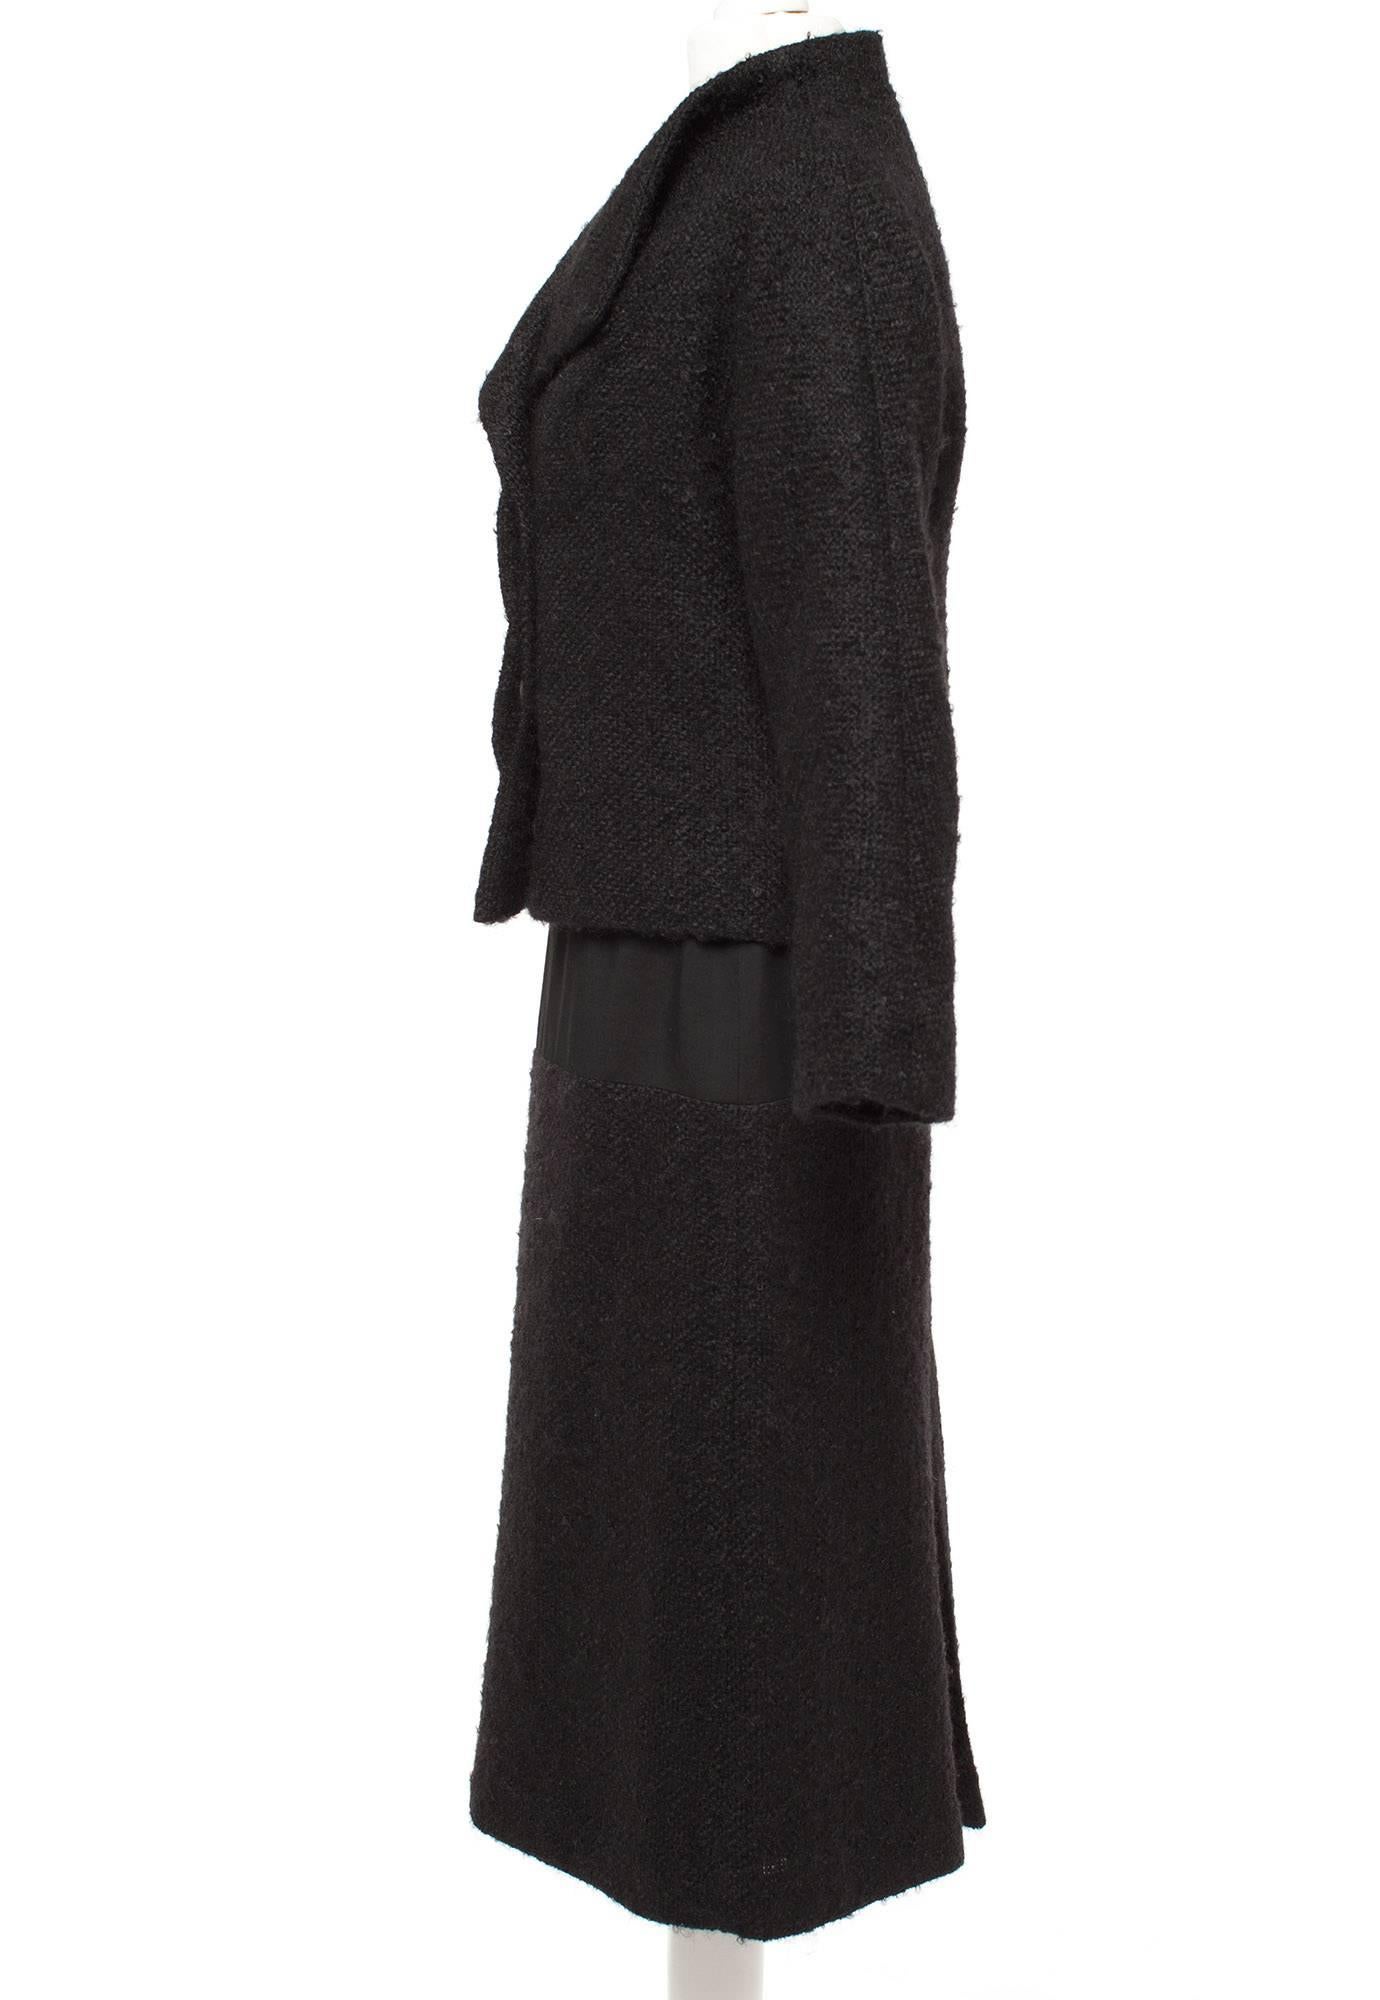 Jacket is short, cut just below waist, fold over collar, 3/4 sleeves. Skirt is pencil shape, top skirt in gabardine, bottom skirt in Boucle wool.